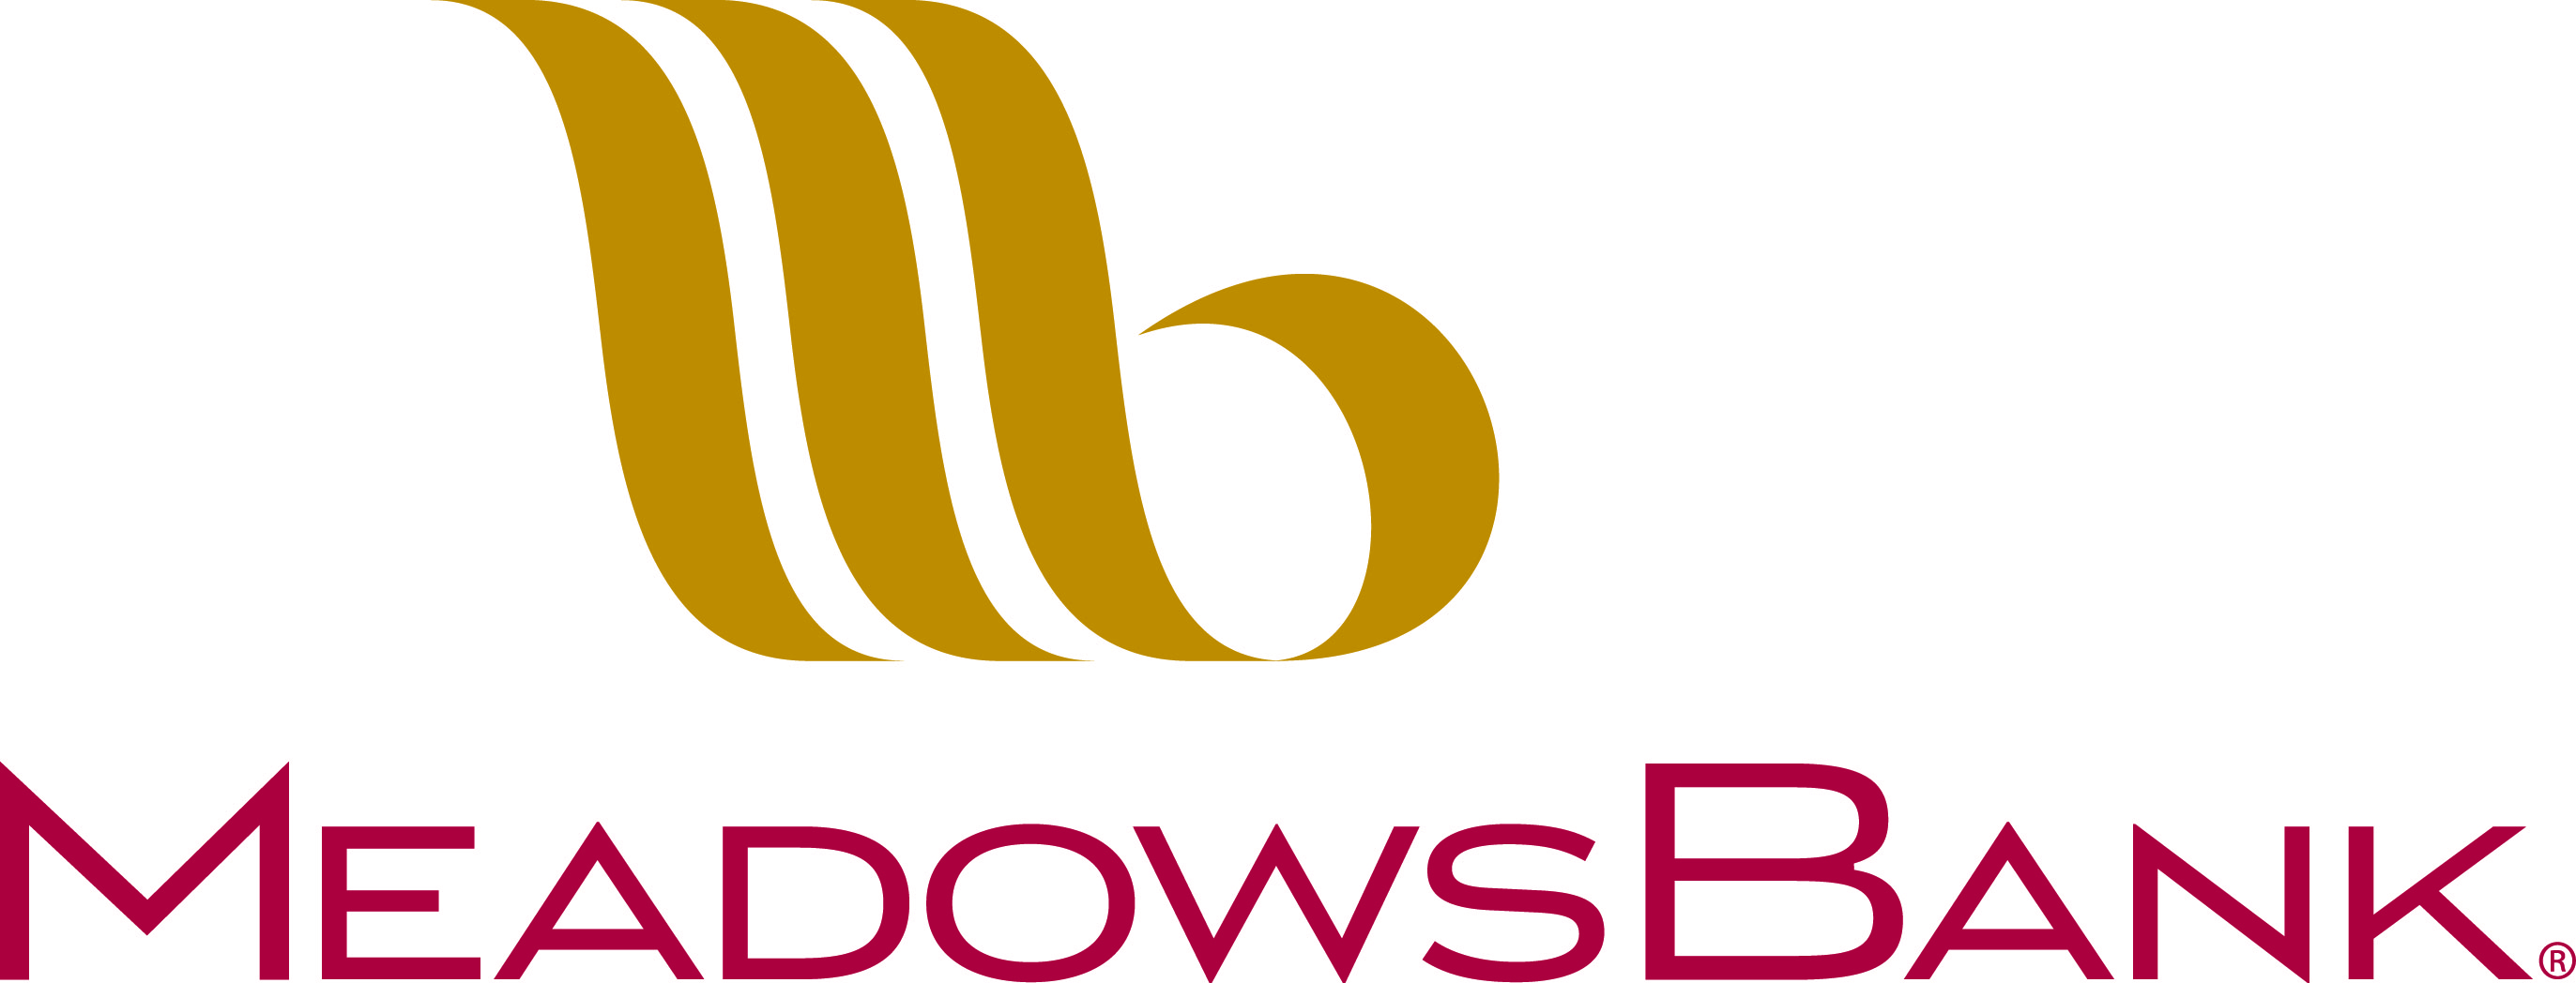 Meadows Bank Total Loans Increase 24%